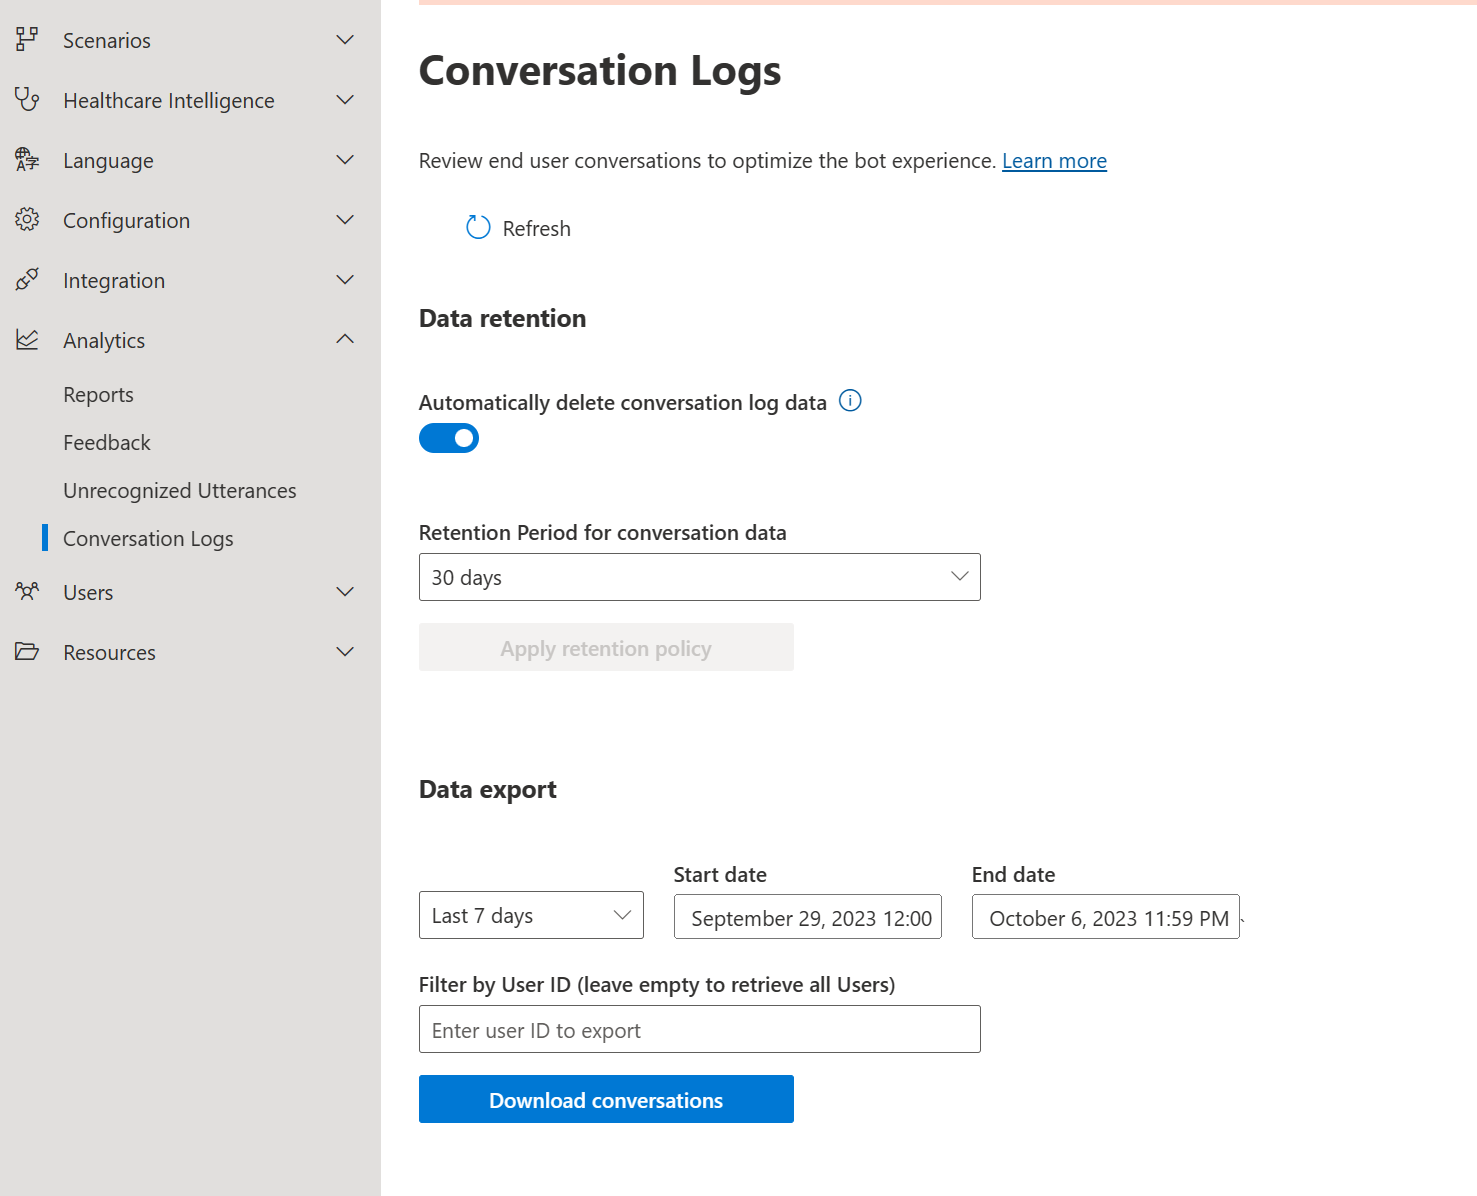 A screenshot of the conversation log view